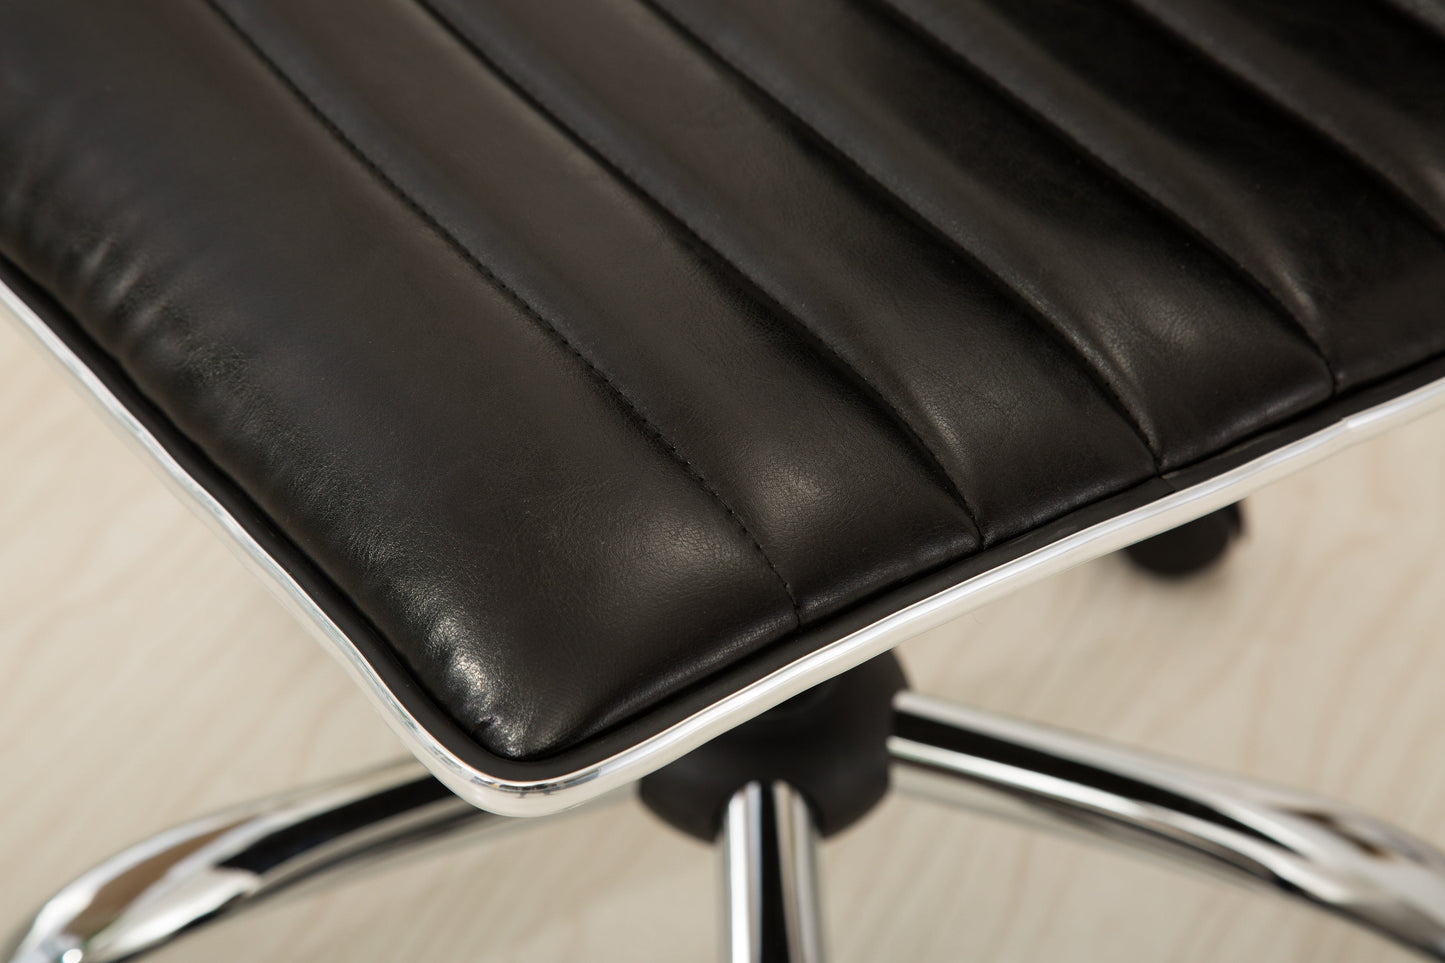 Fremo Chromel Adjustable Air Lift Office Chair in Black